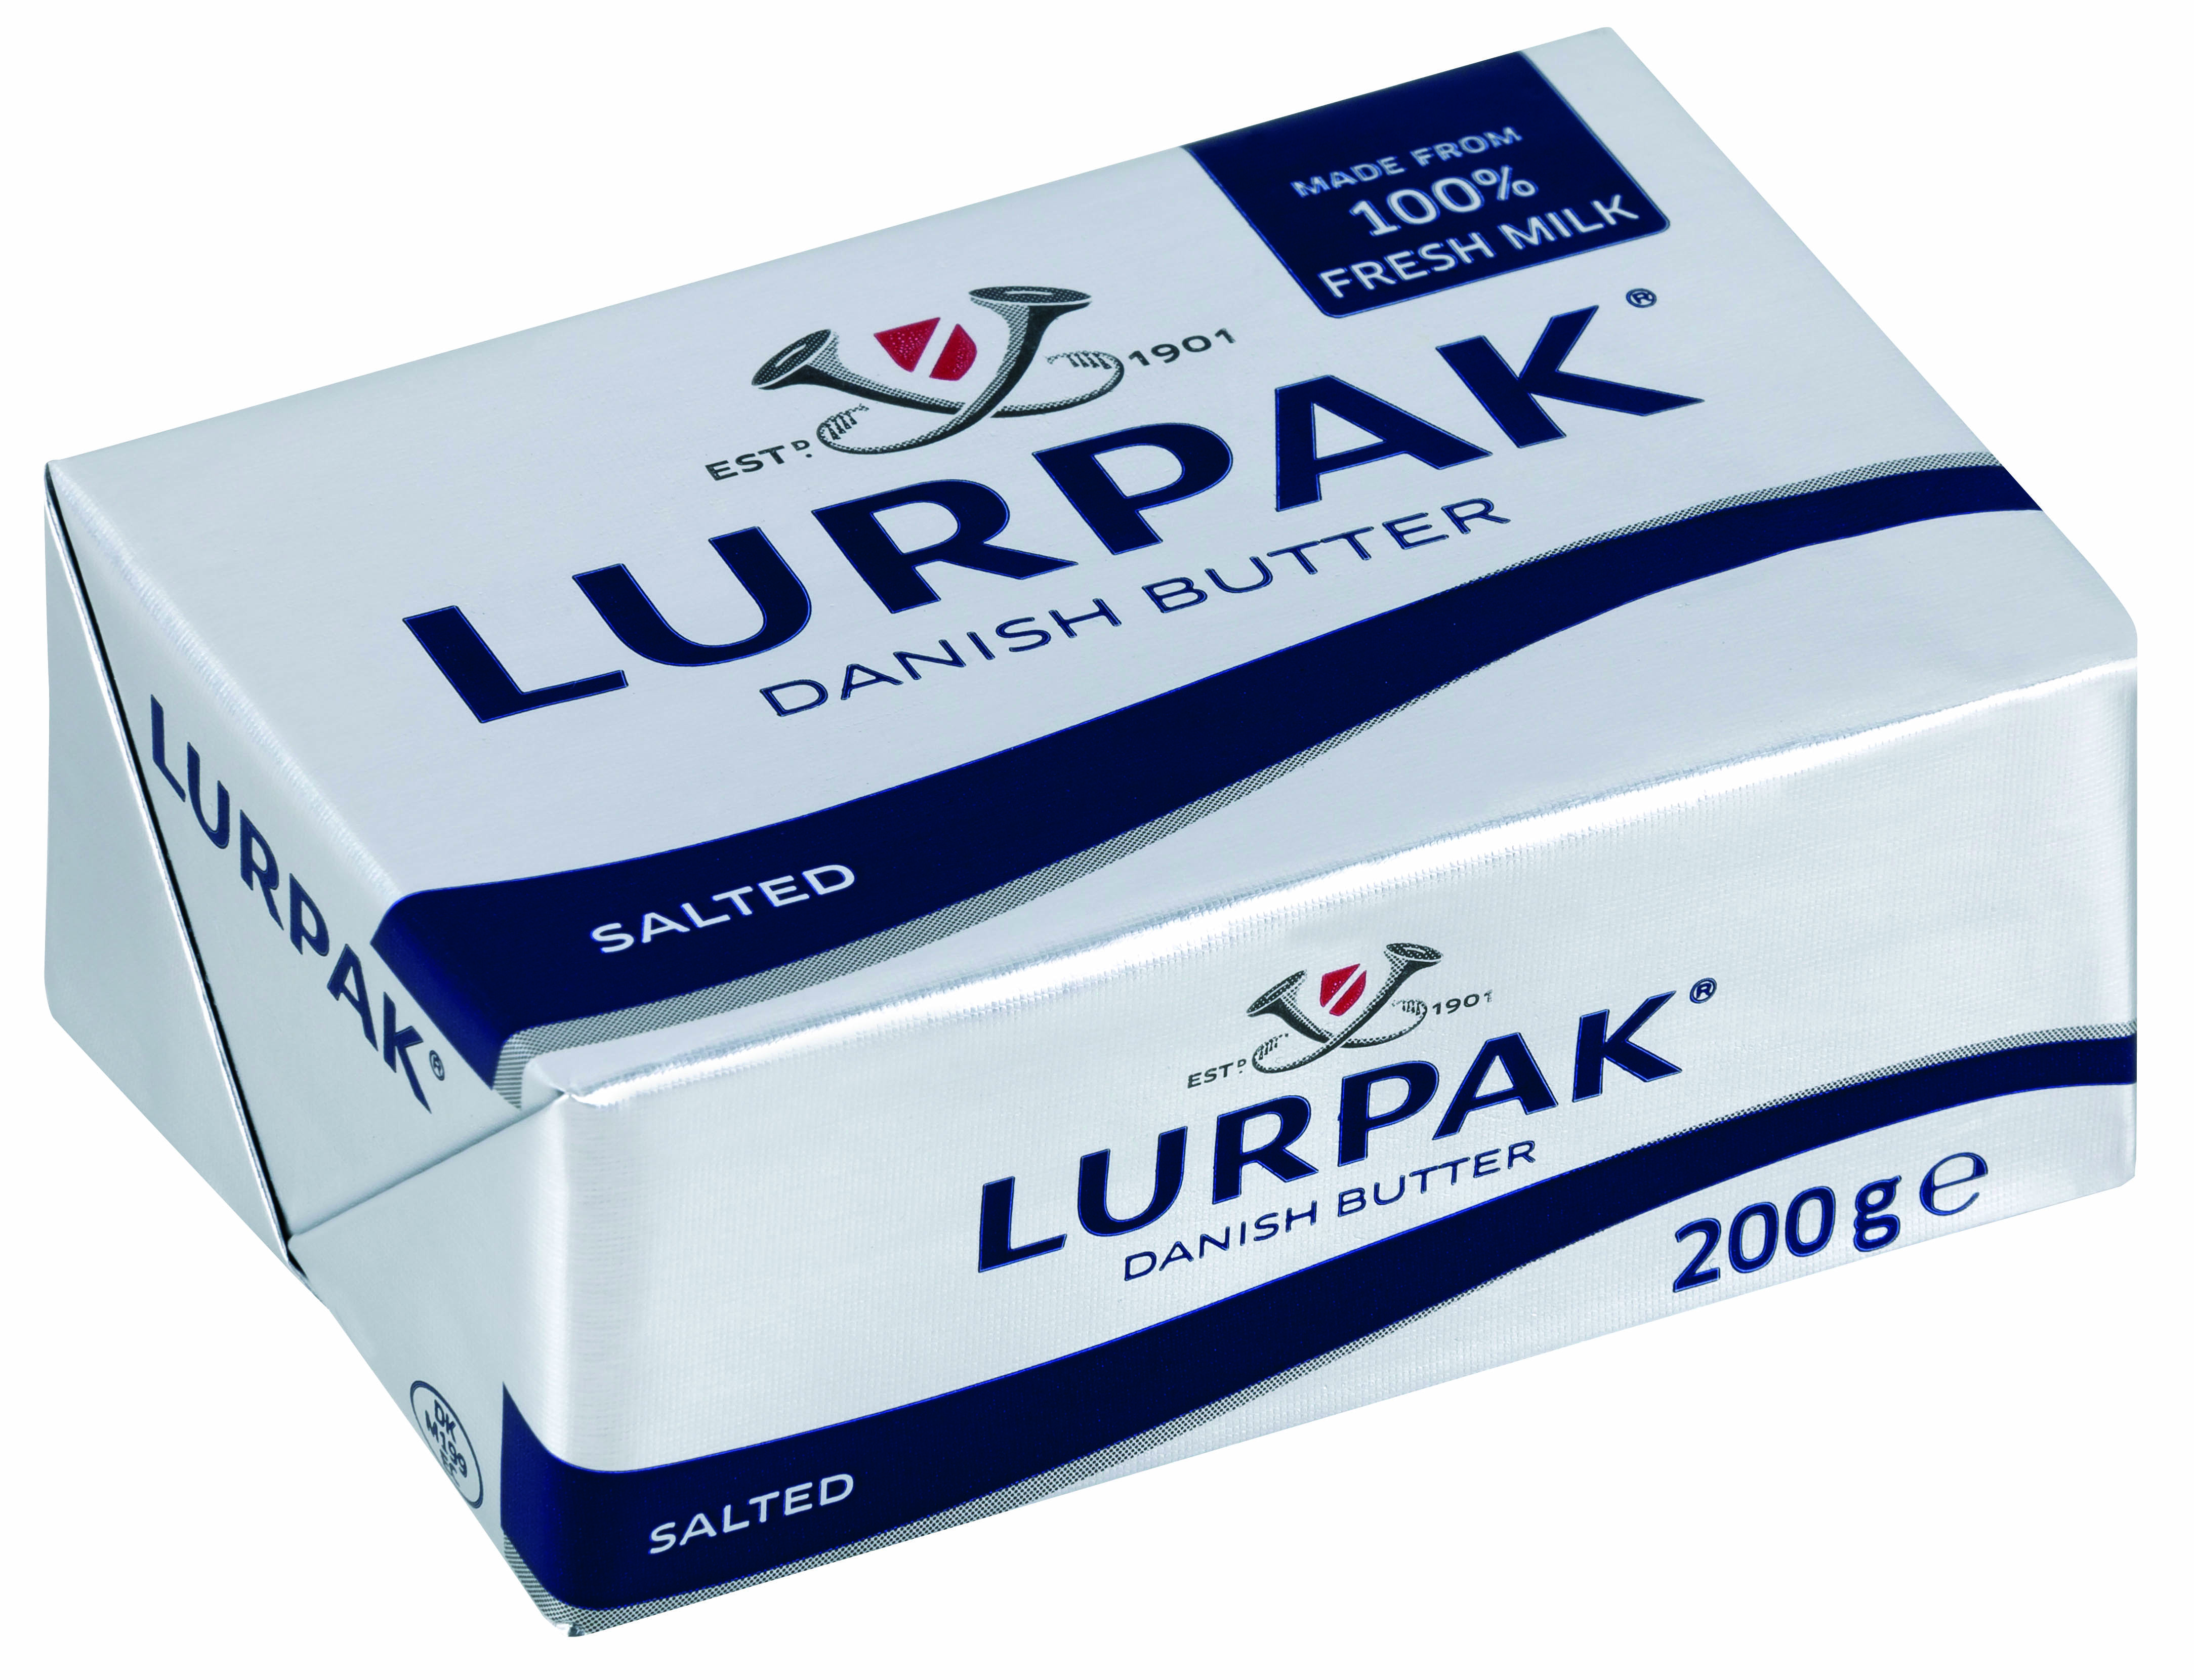 Is lurpak what What is